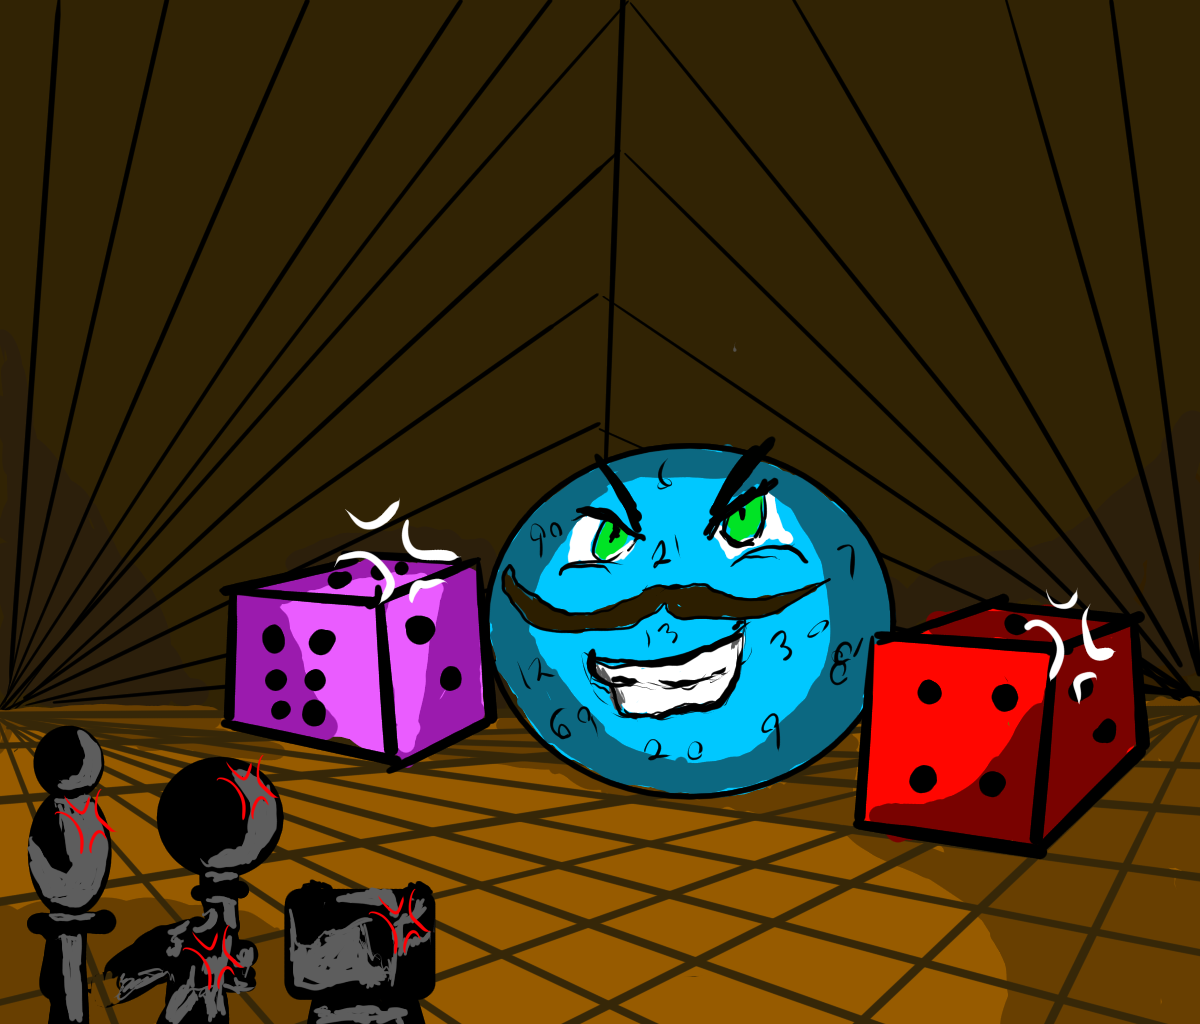 The dice's Casino